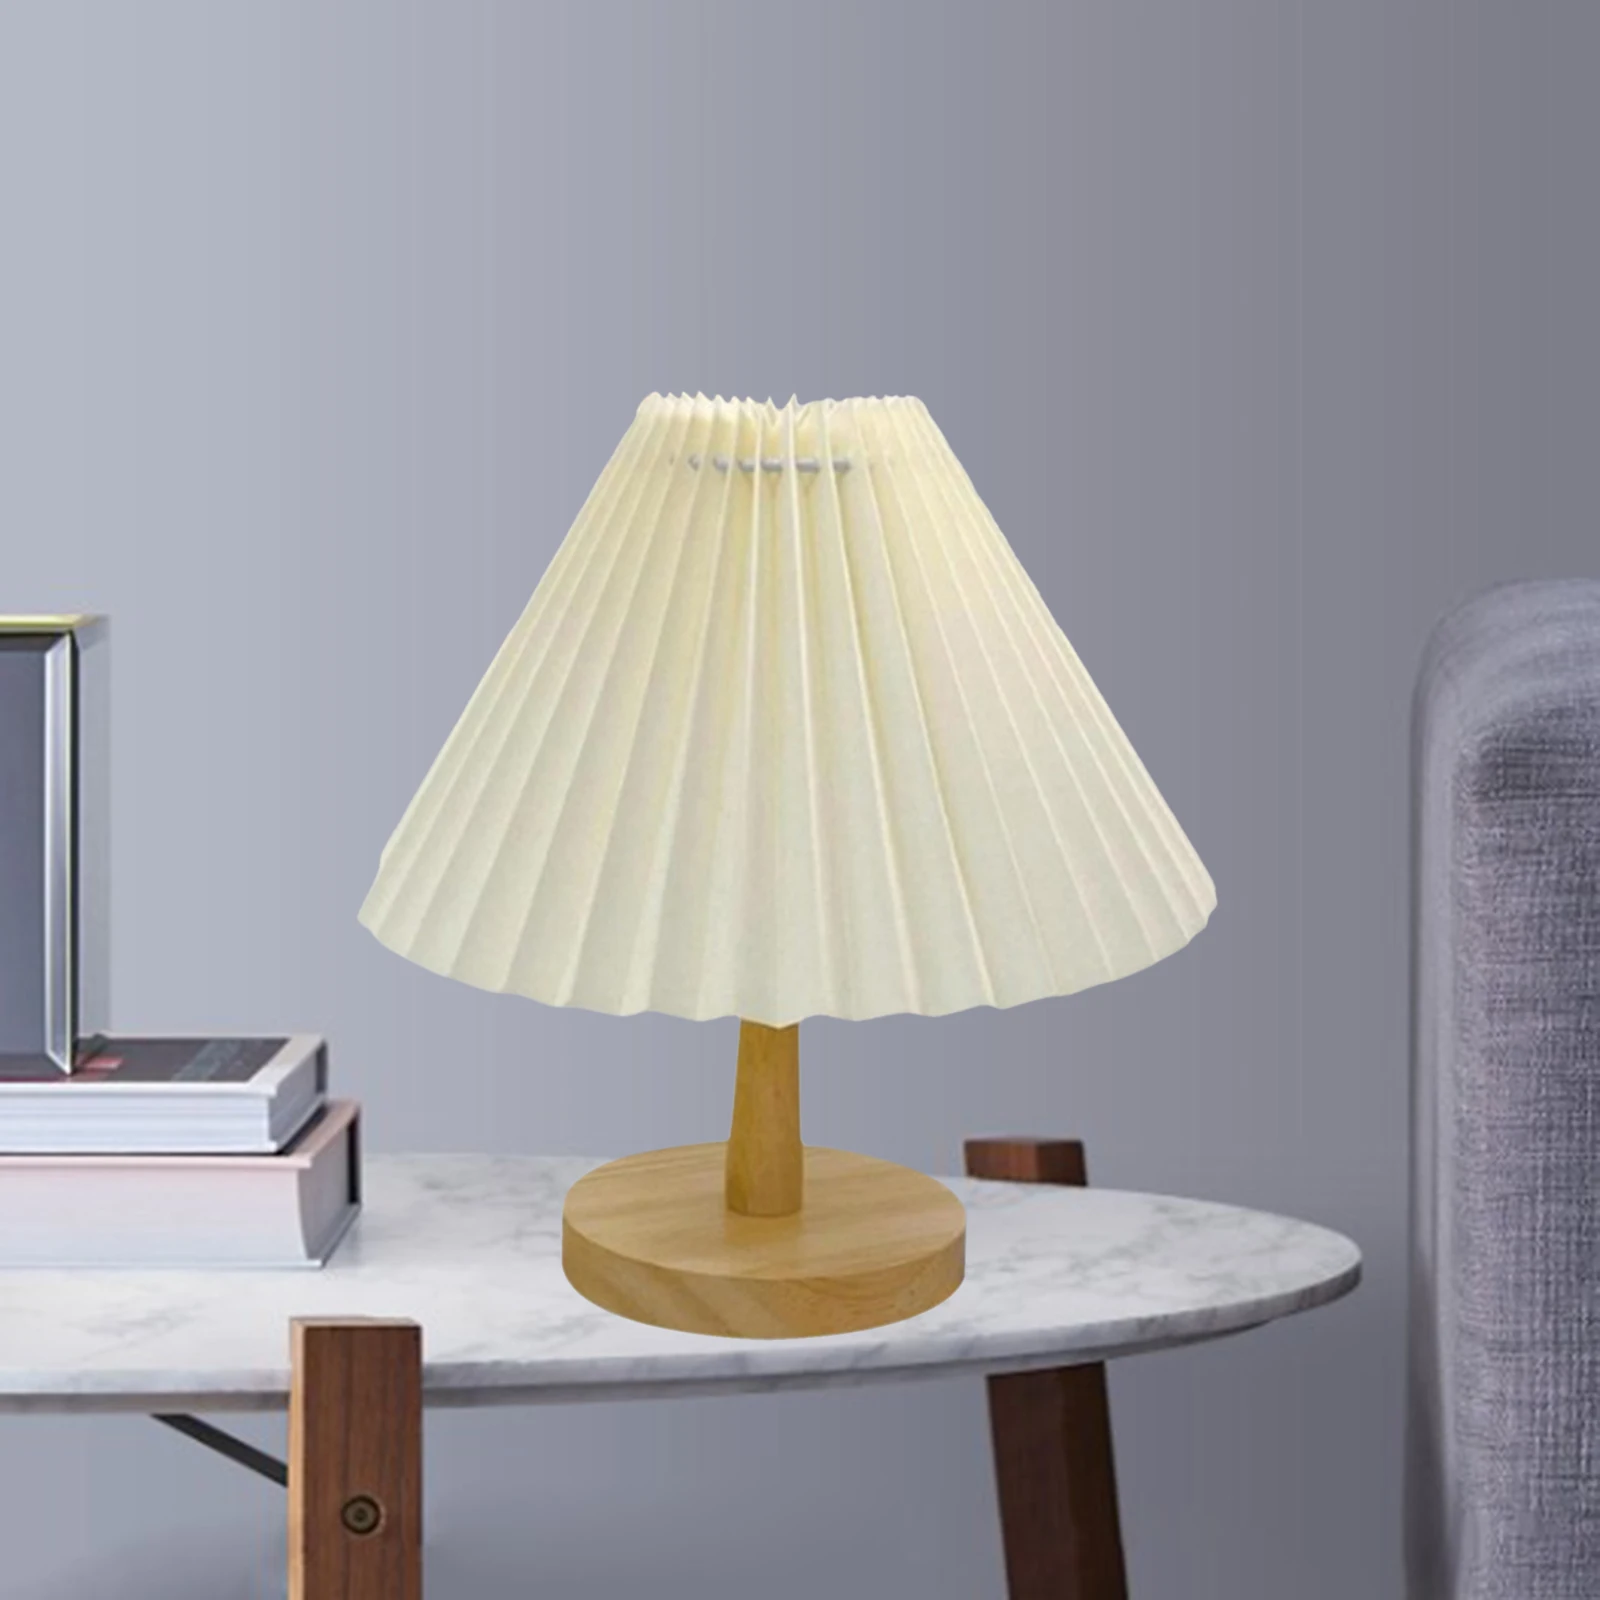 Modern Pleated Table Lamp Wood Nightstand Lamp Study Reading Table Light for Living Room Bedroom Bedside Decor Desk Nightlight